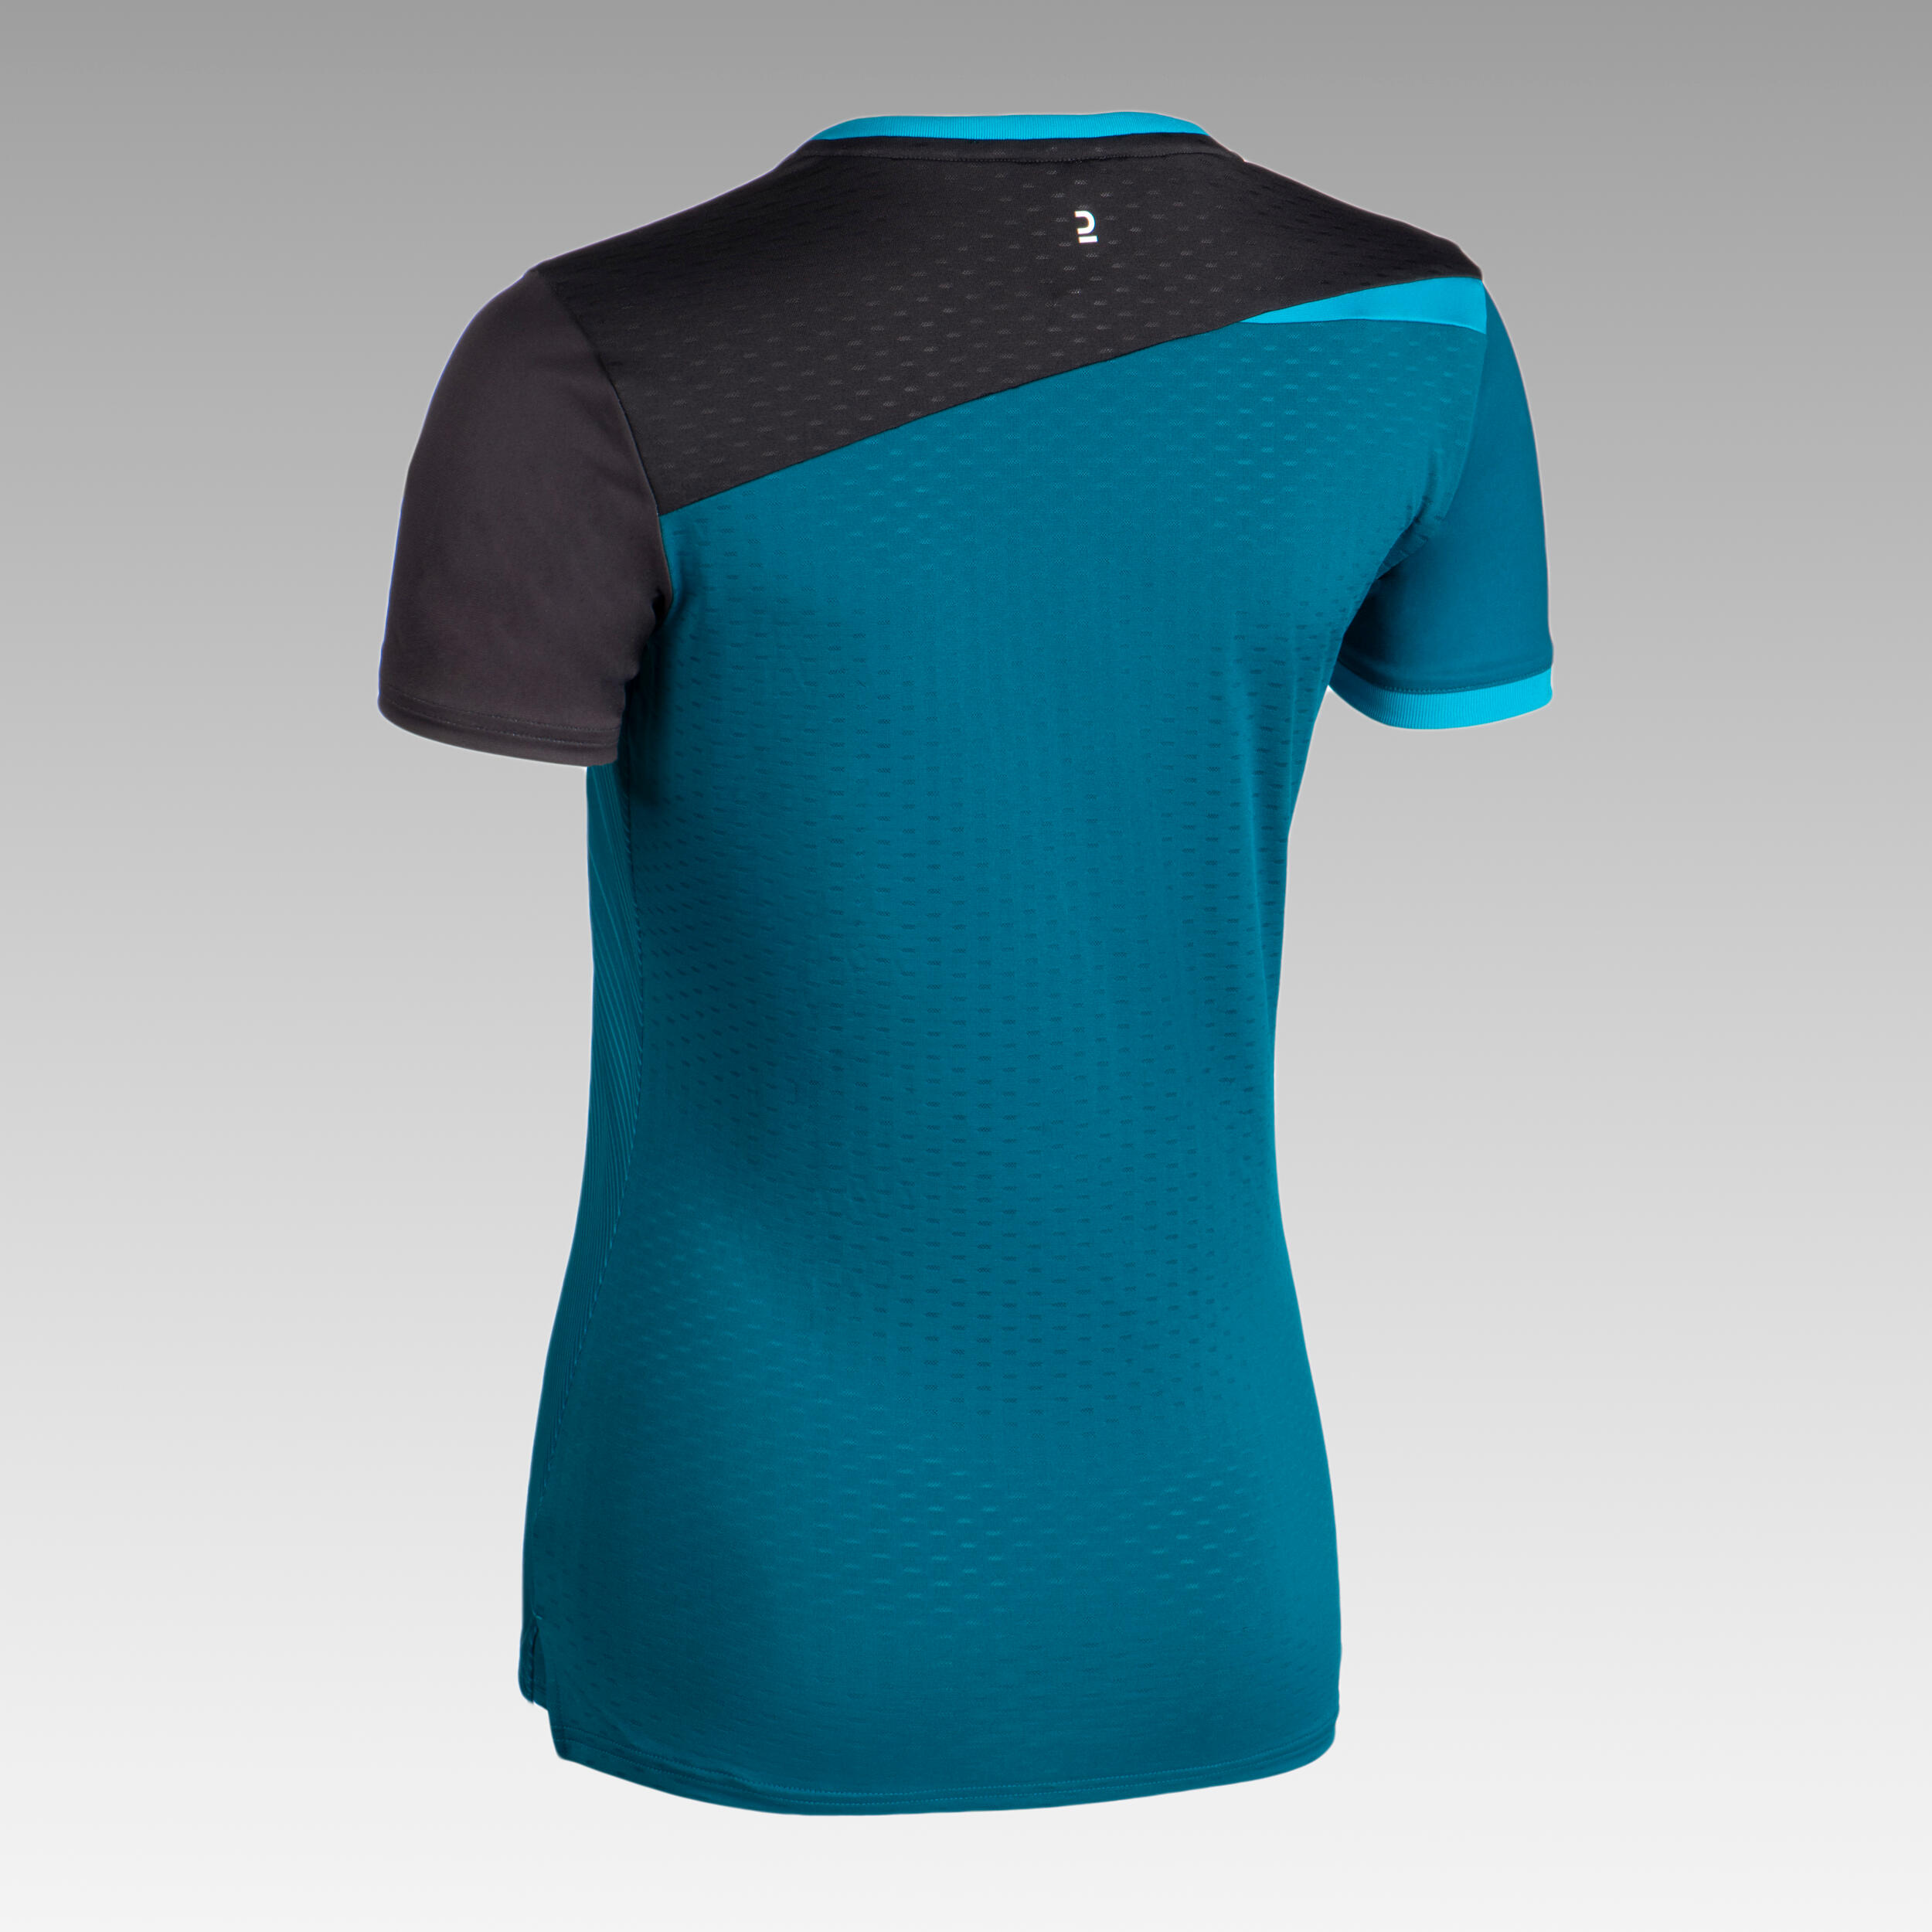 Women's Short-Sleeved Handball Jersey H500 - Blue/Black 3/12